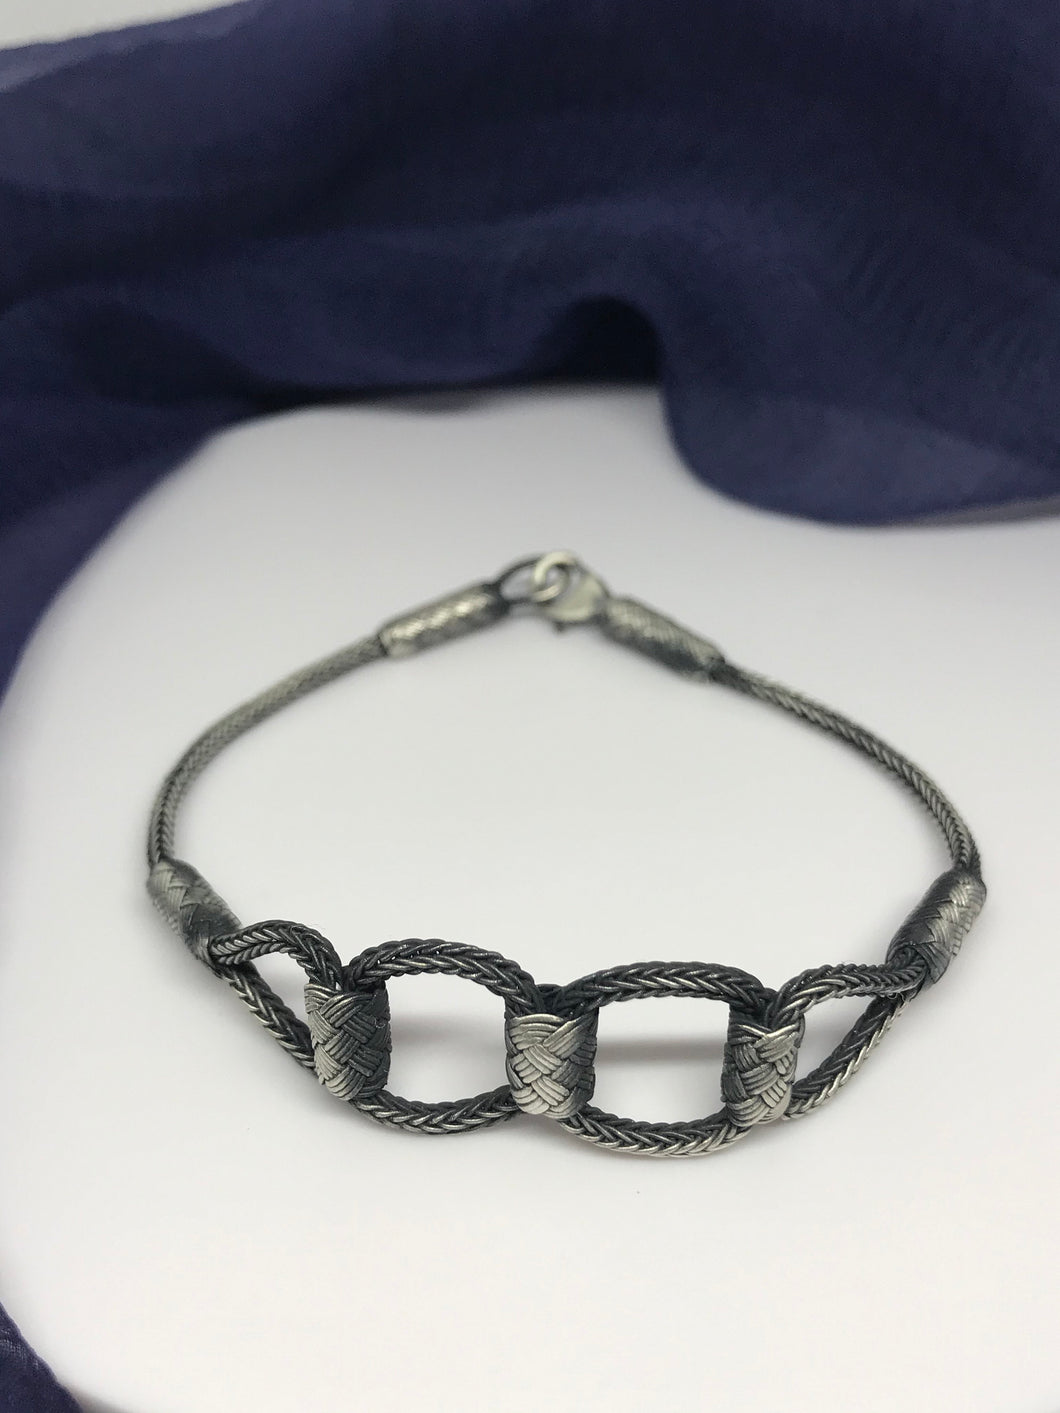 Hand-Woven Silver Bracelet Size 7 1/2'', love knot